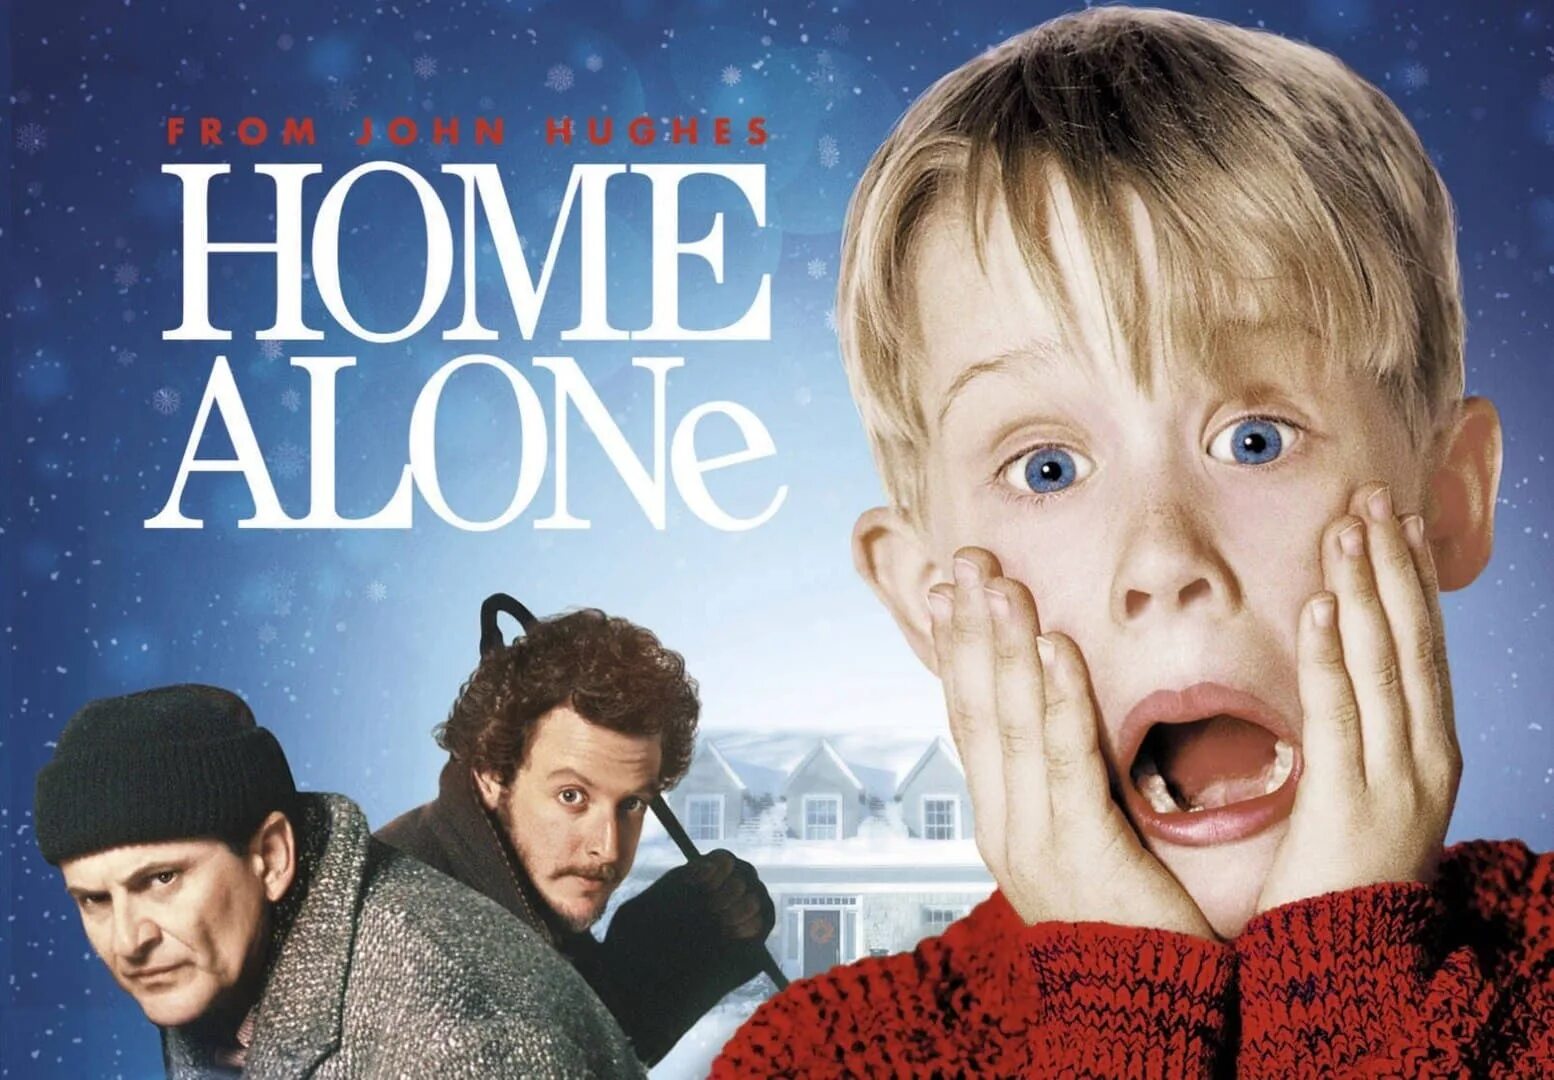 Сюжет 1 дома. Один дома. Один дома 1. Один дома Постер к фильму. Один дома / Home Alone (1990).